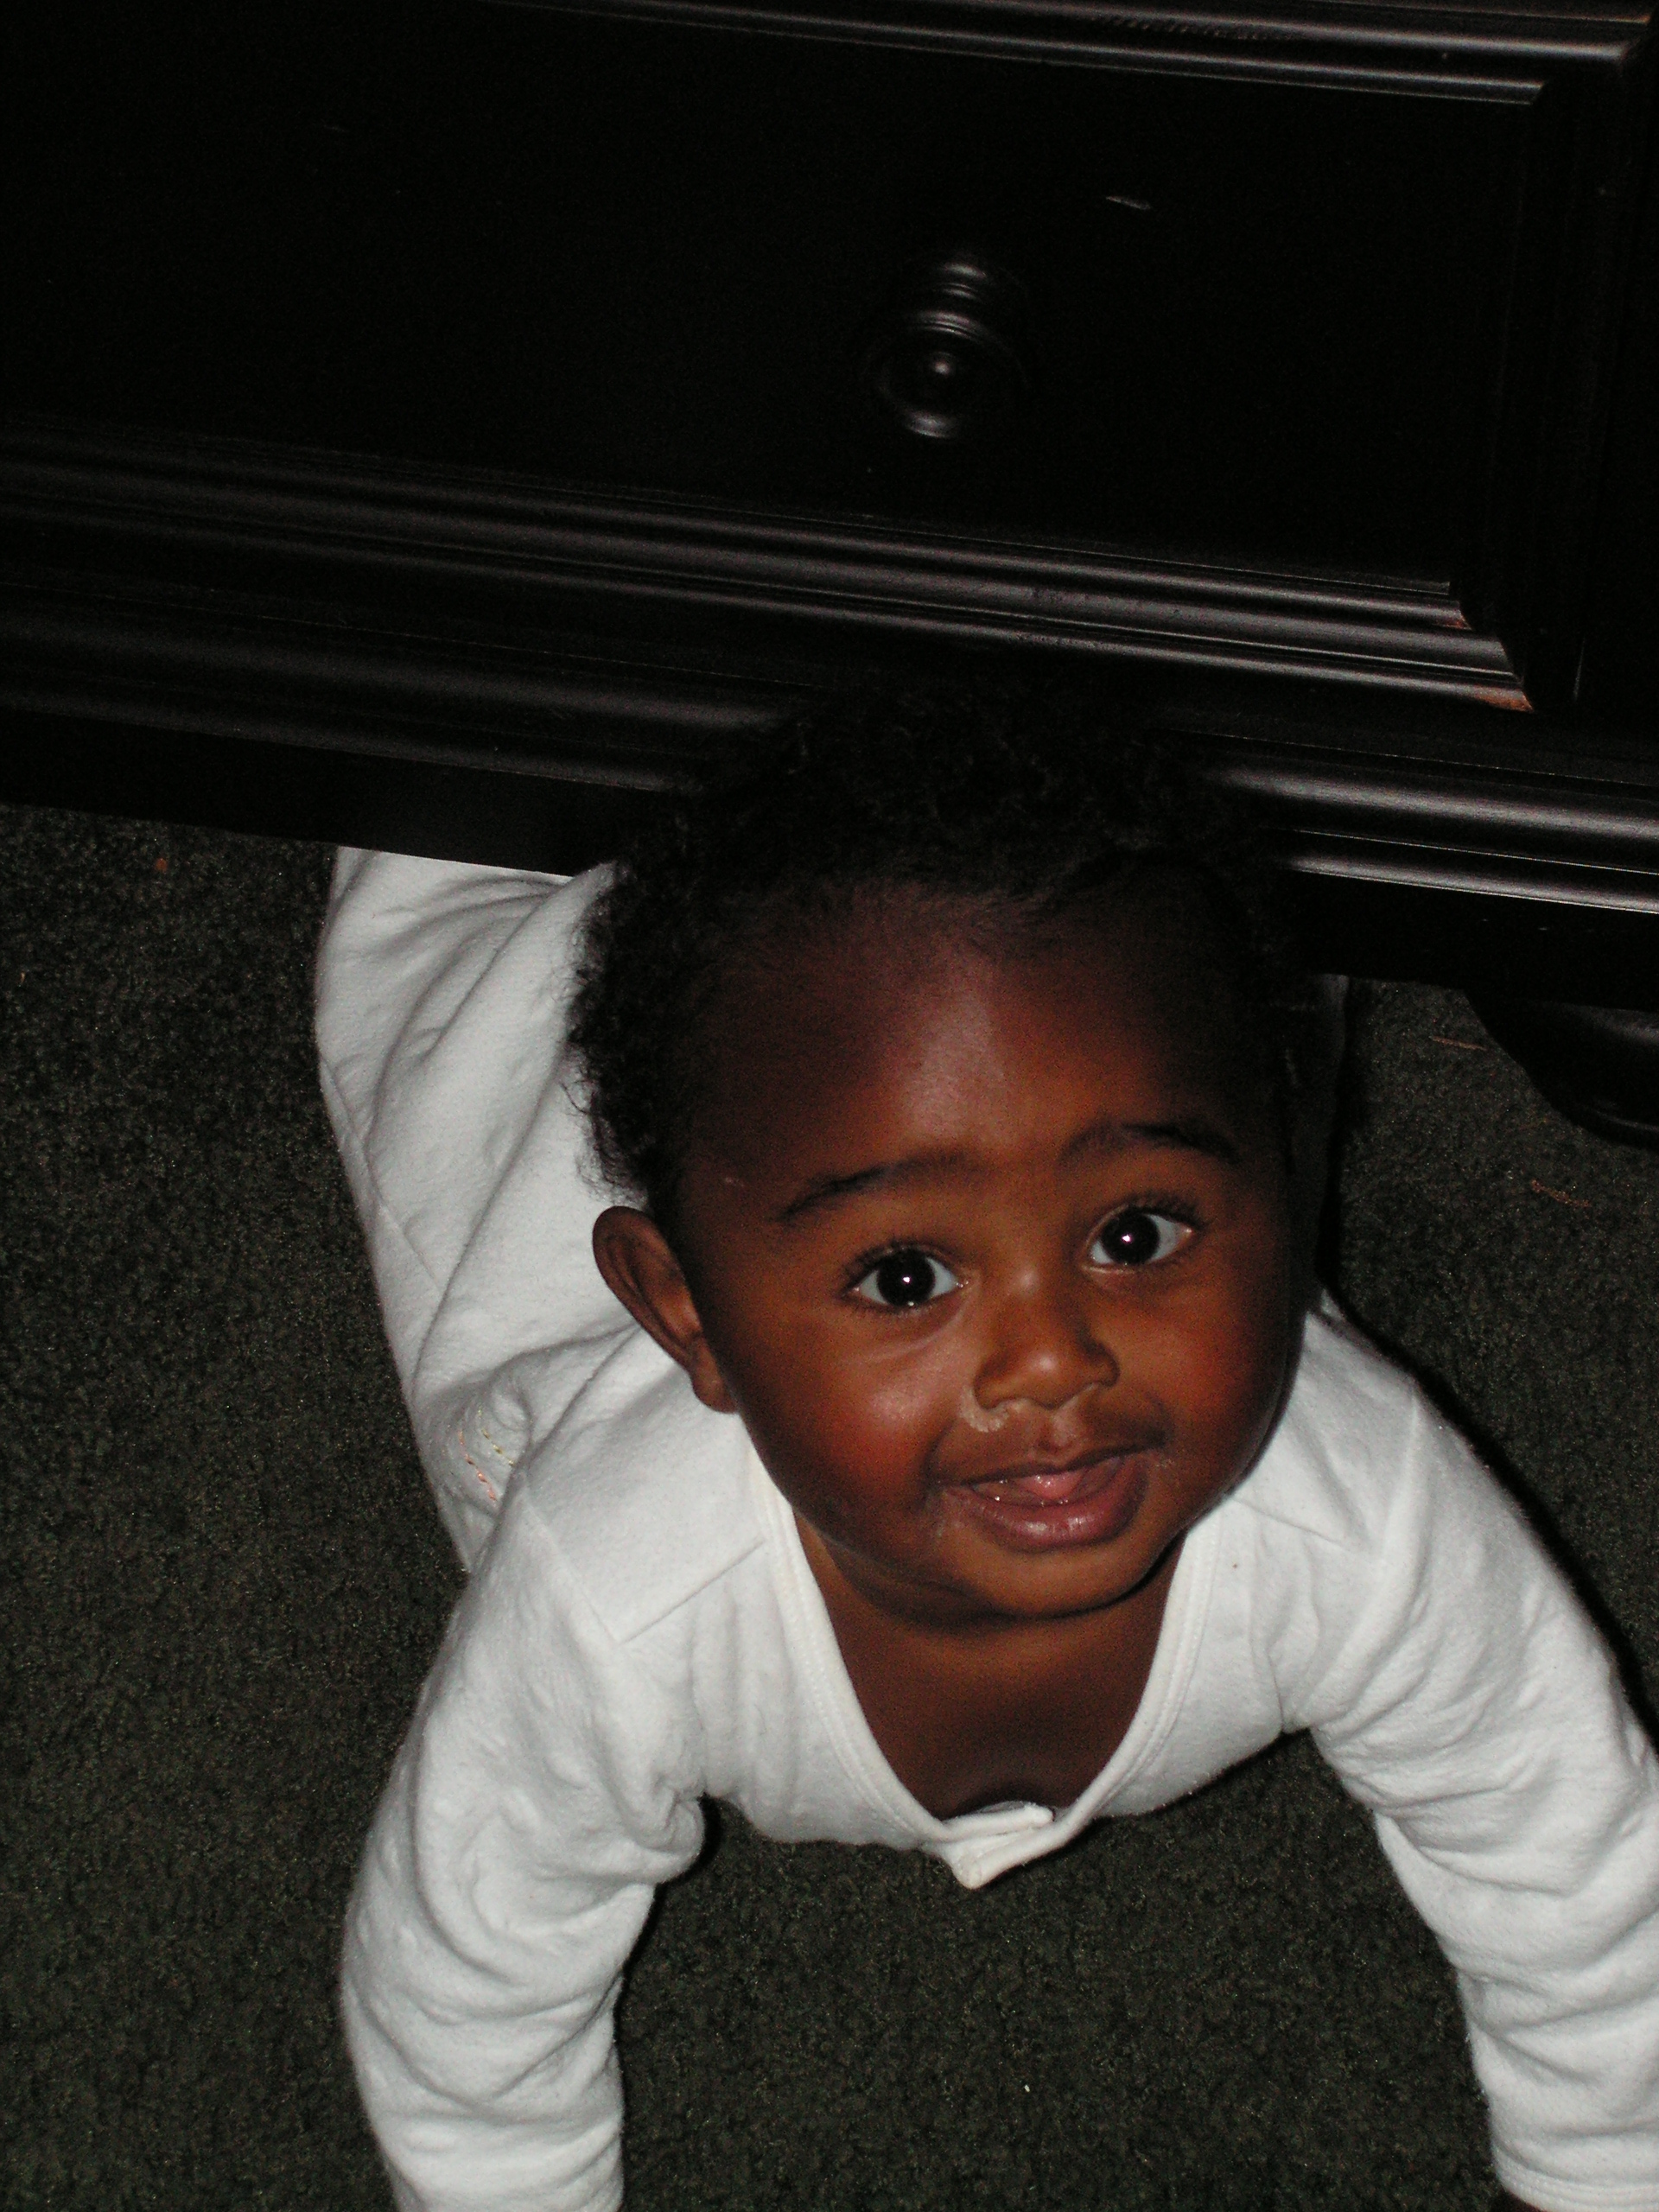 Stuck under the dresser